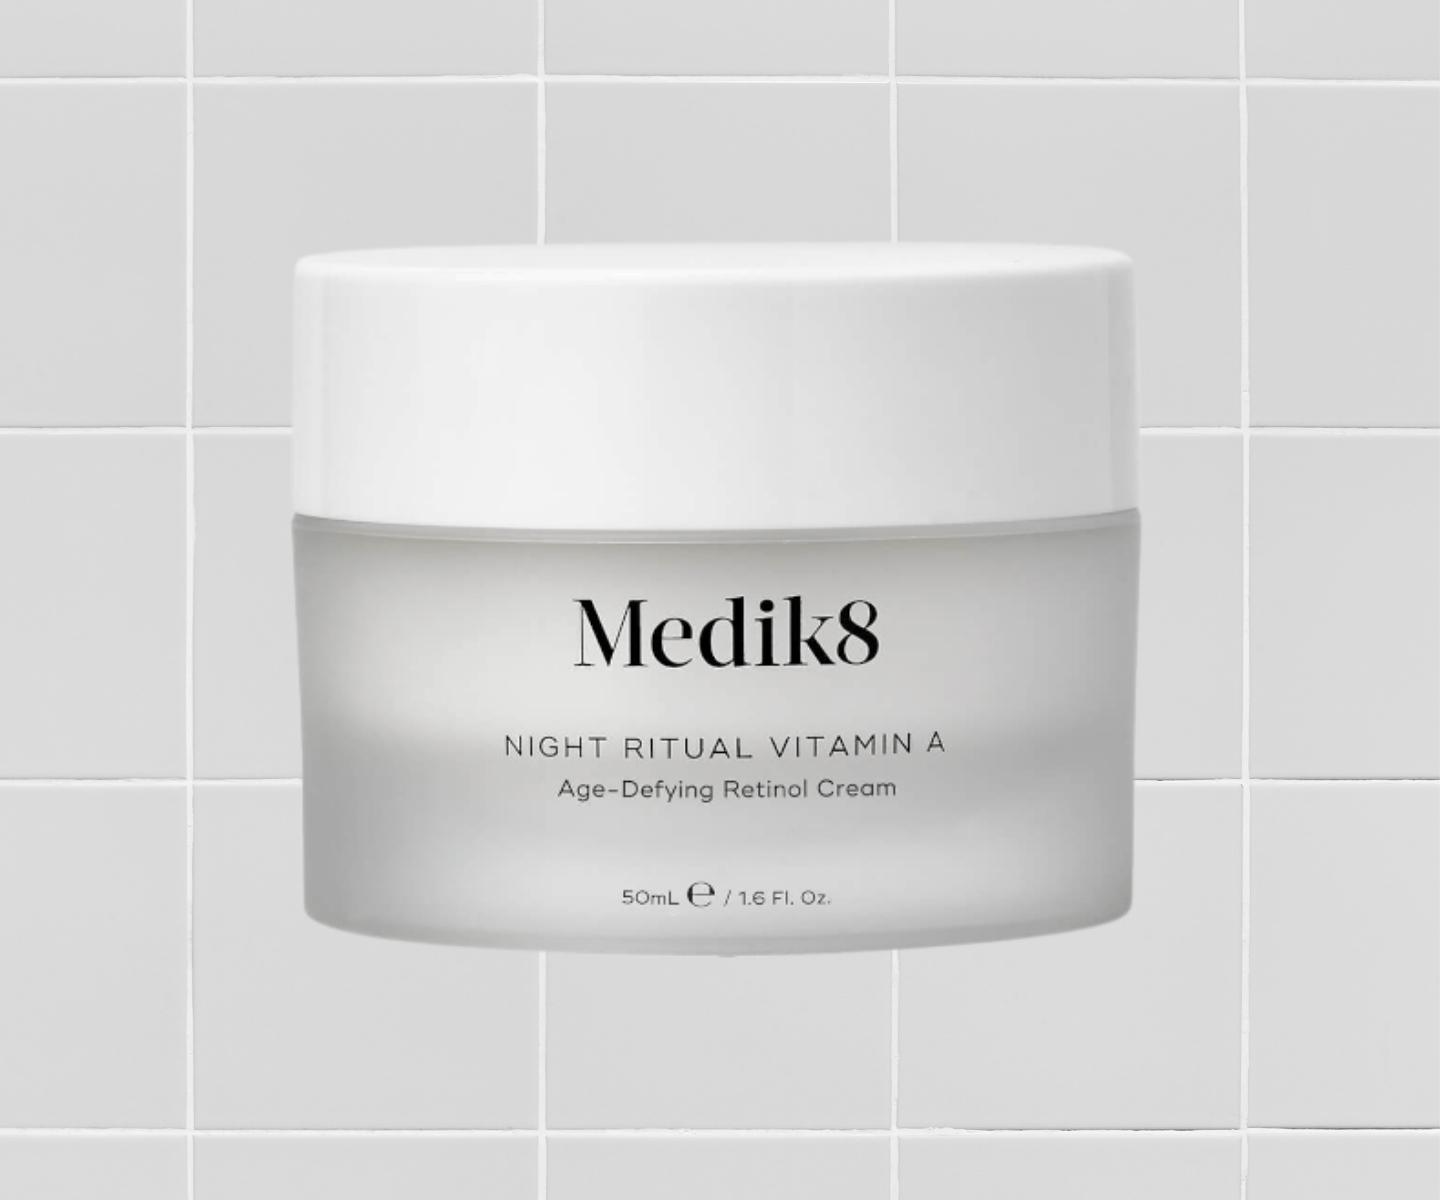 Medik8 Night Ritual Vitamin A Age-Defying Retinol Cream